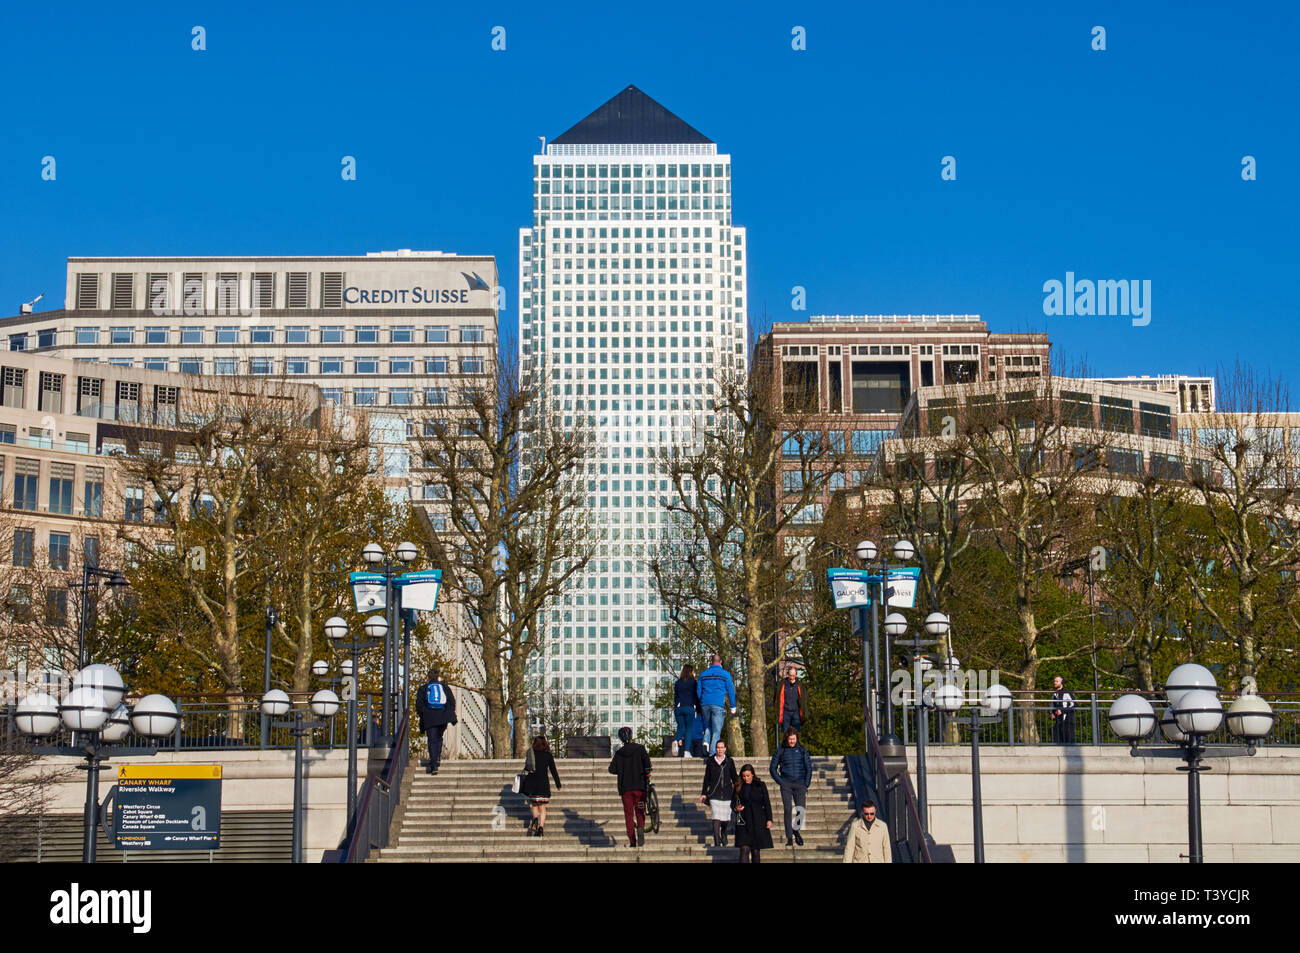 Ingresso al Canary Wharf business district da Riverside marciapiede, Docklands di Londra, Regno Unito. Foto Stock